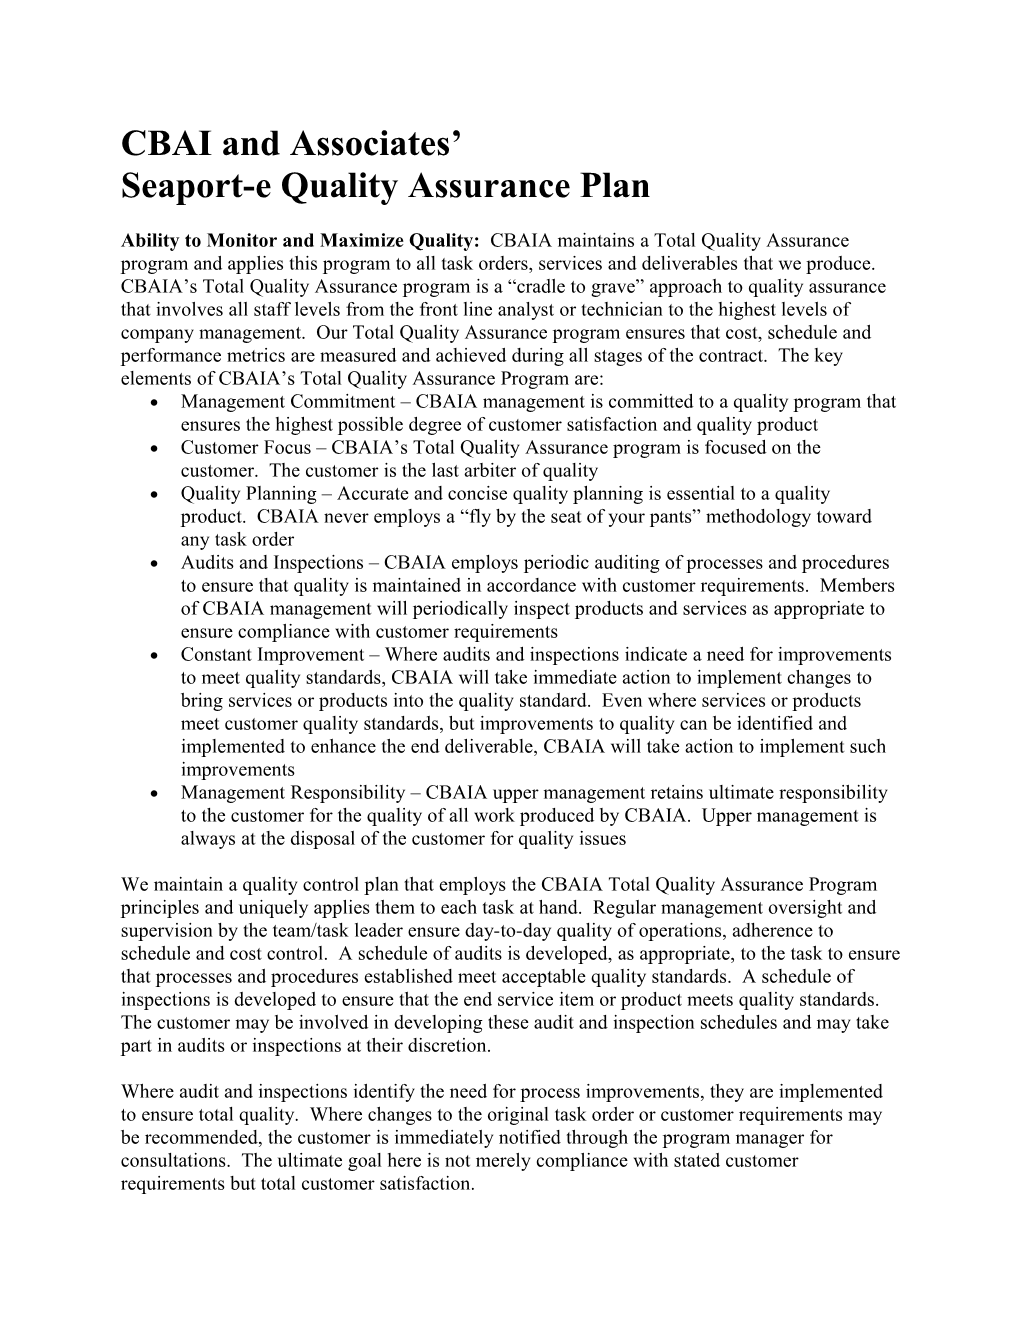 Seaport-E Quality Assurance Plan